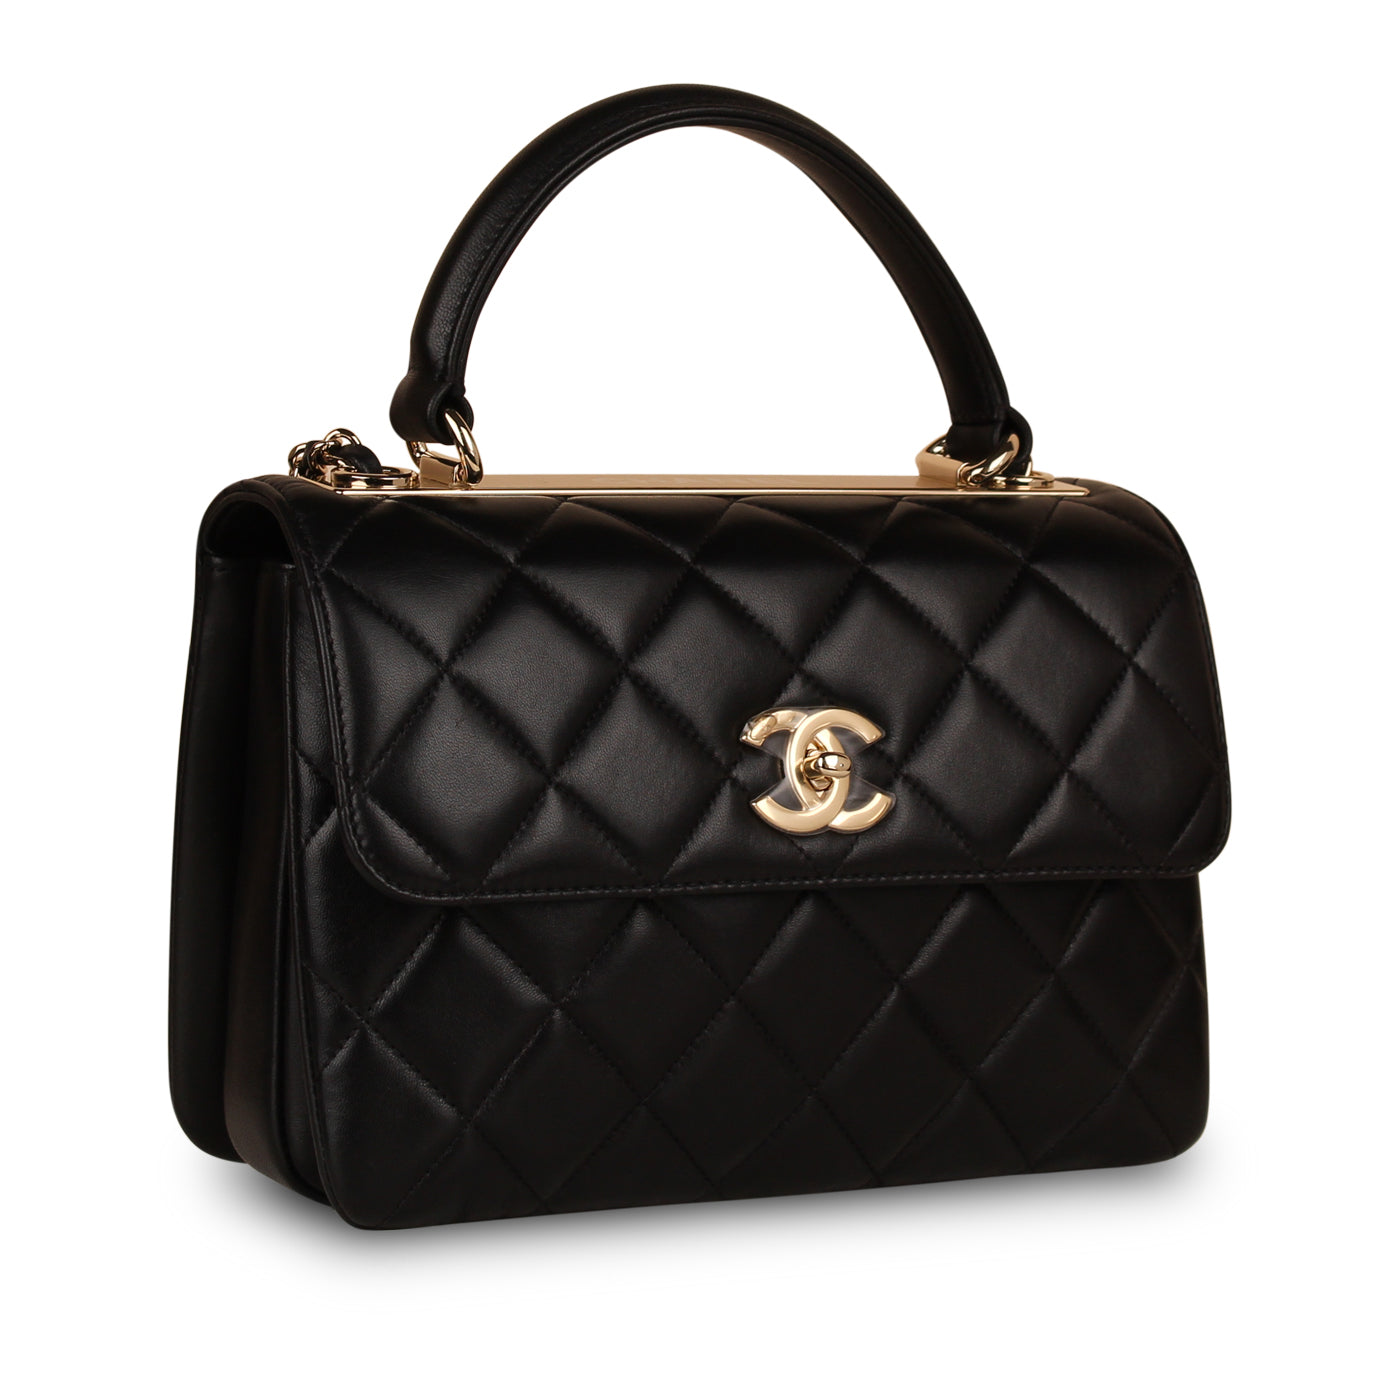 Chanel - Small Trendy CC Flap Bag - Black Lambskin